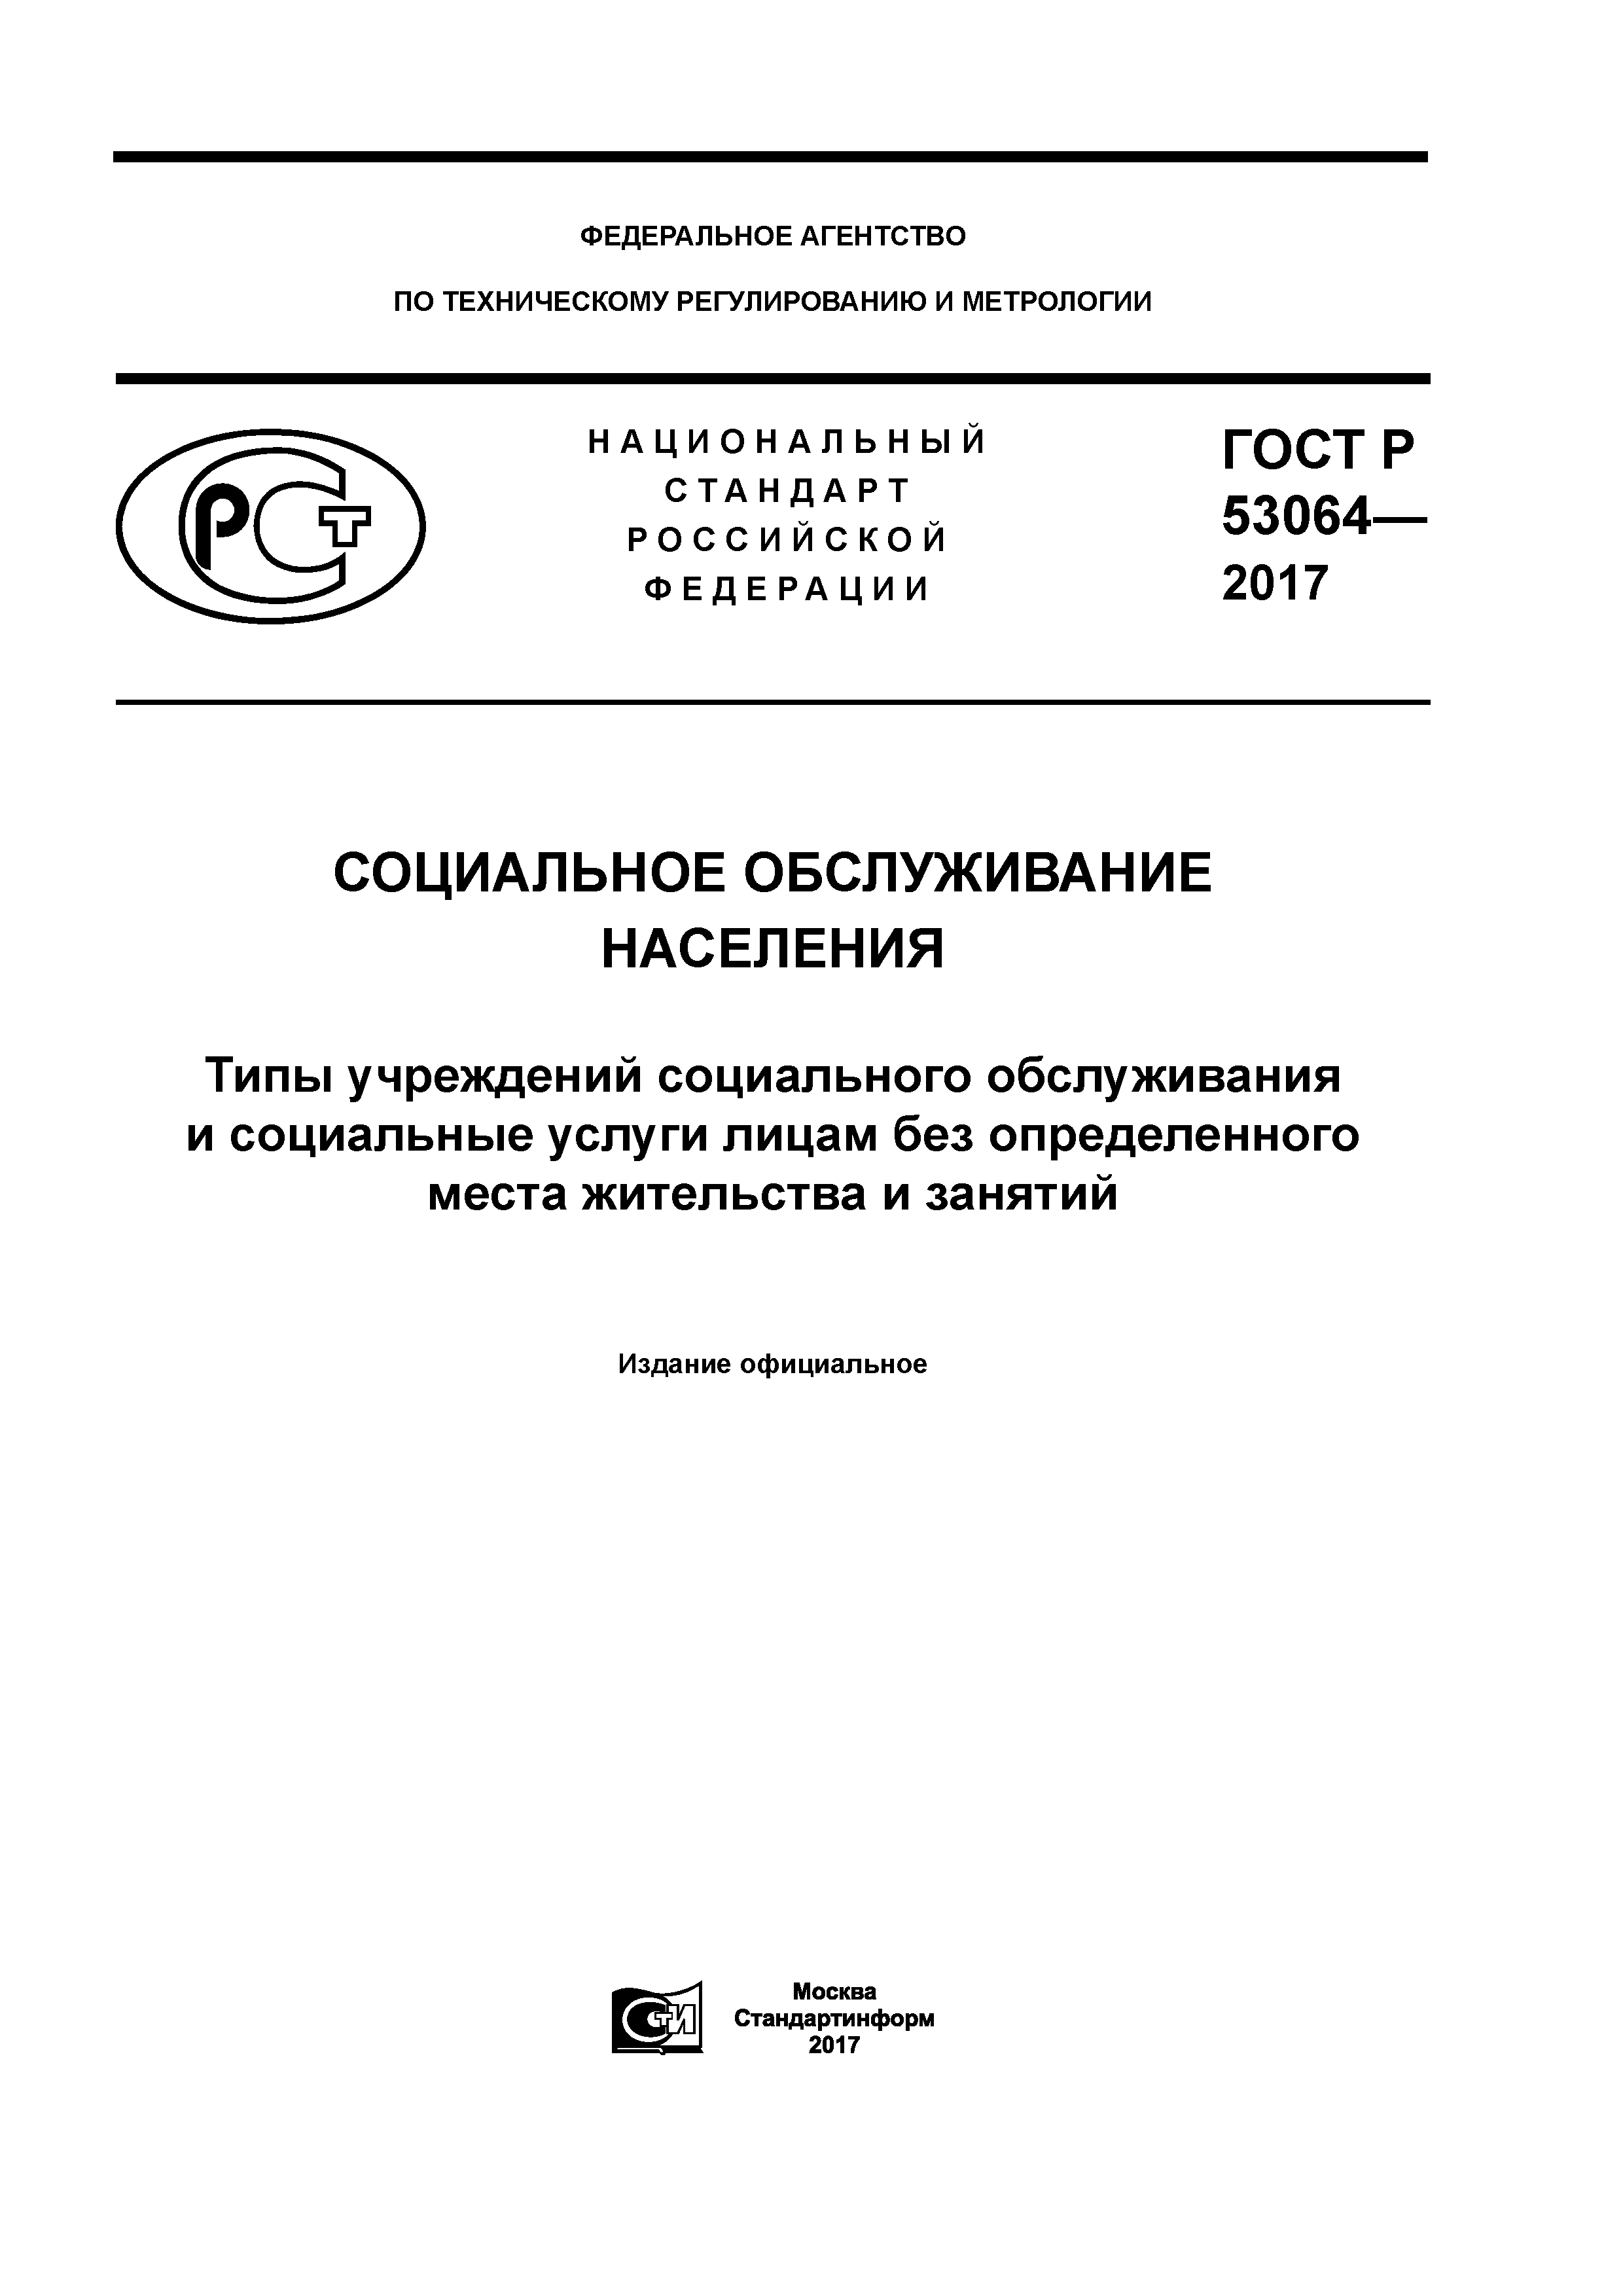 ГОСТ Р 53064-2017